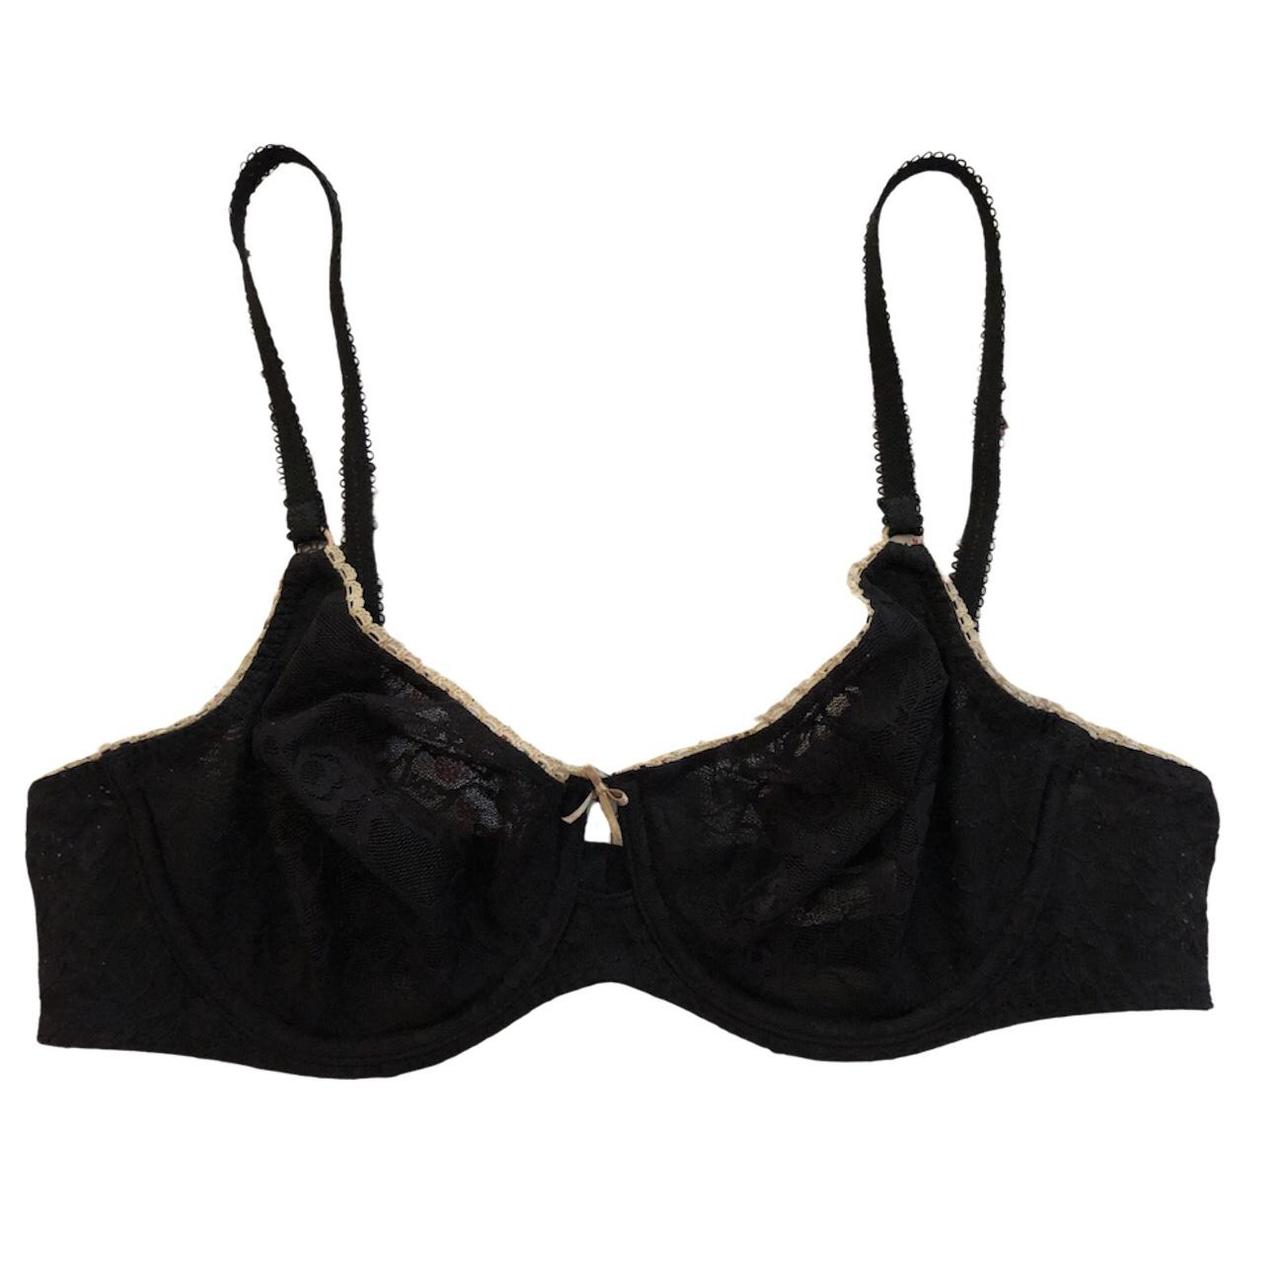 Black lace bra ♥︎ Pretty bra with sheer lace unpadded... - Depop